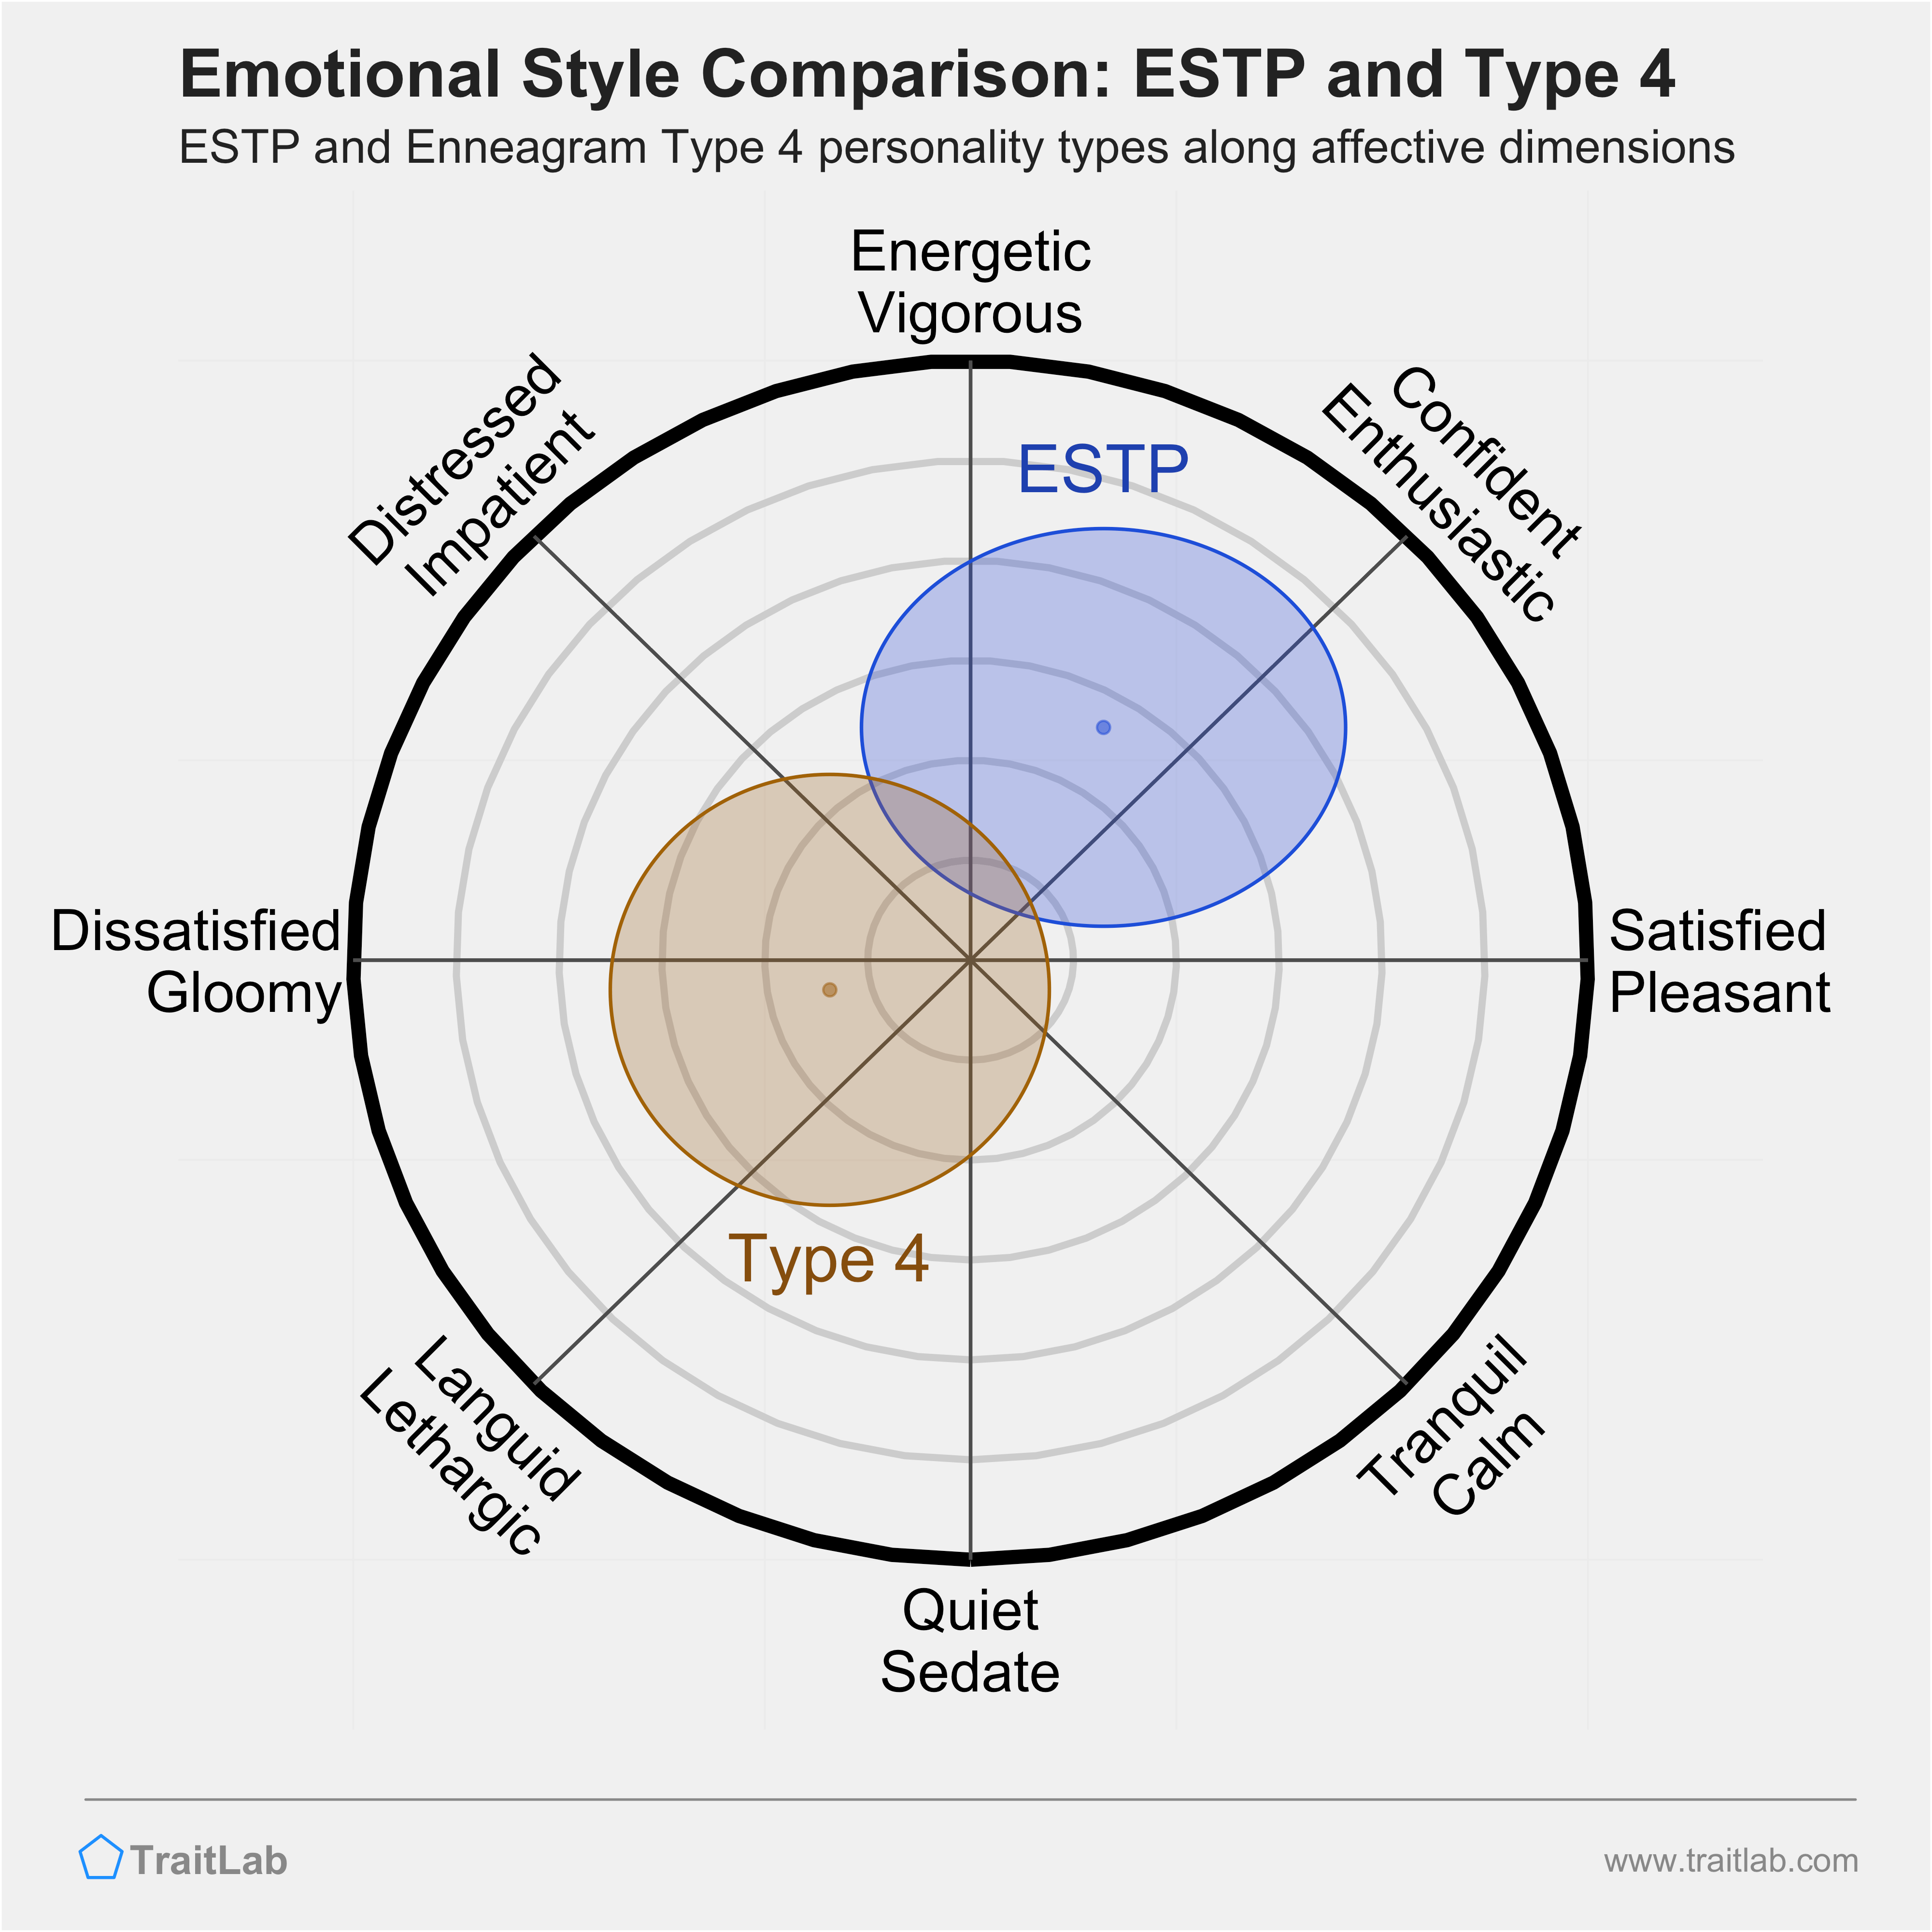 ESTP and Type 4 comparison across emotional (affective) dimensions